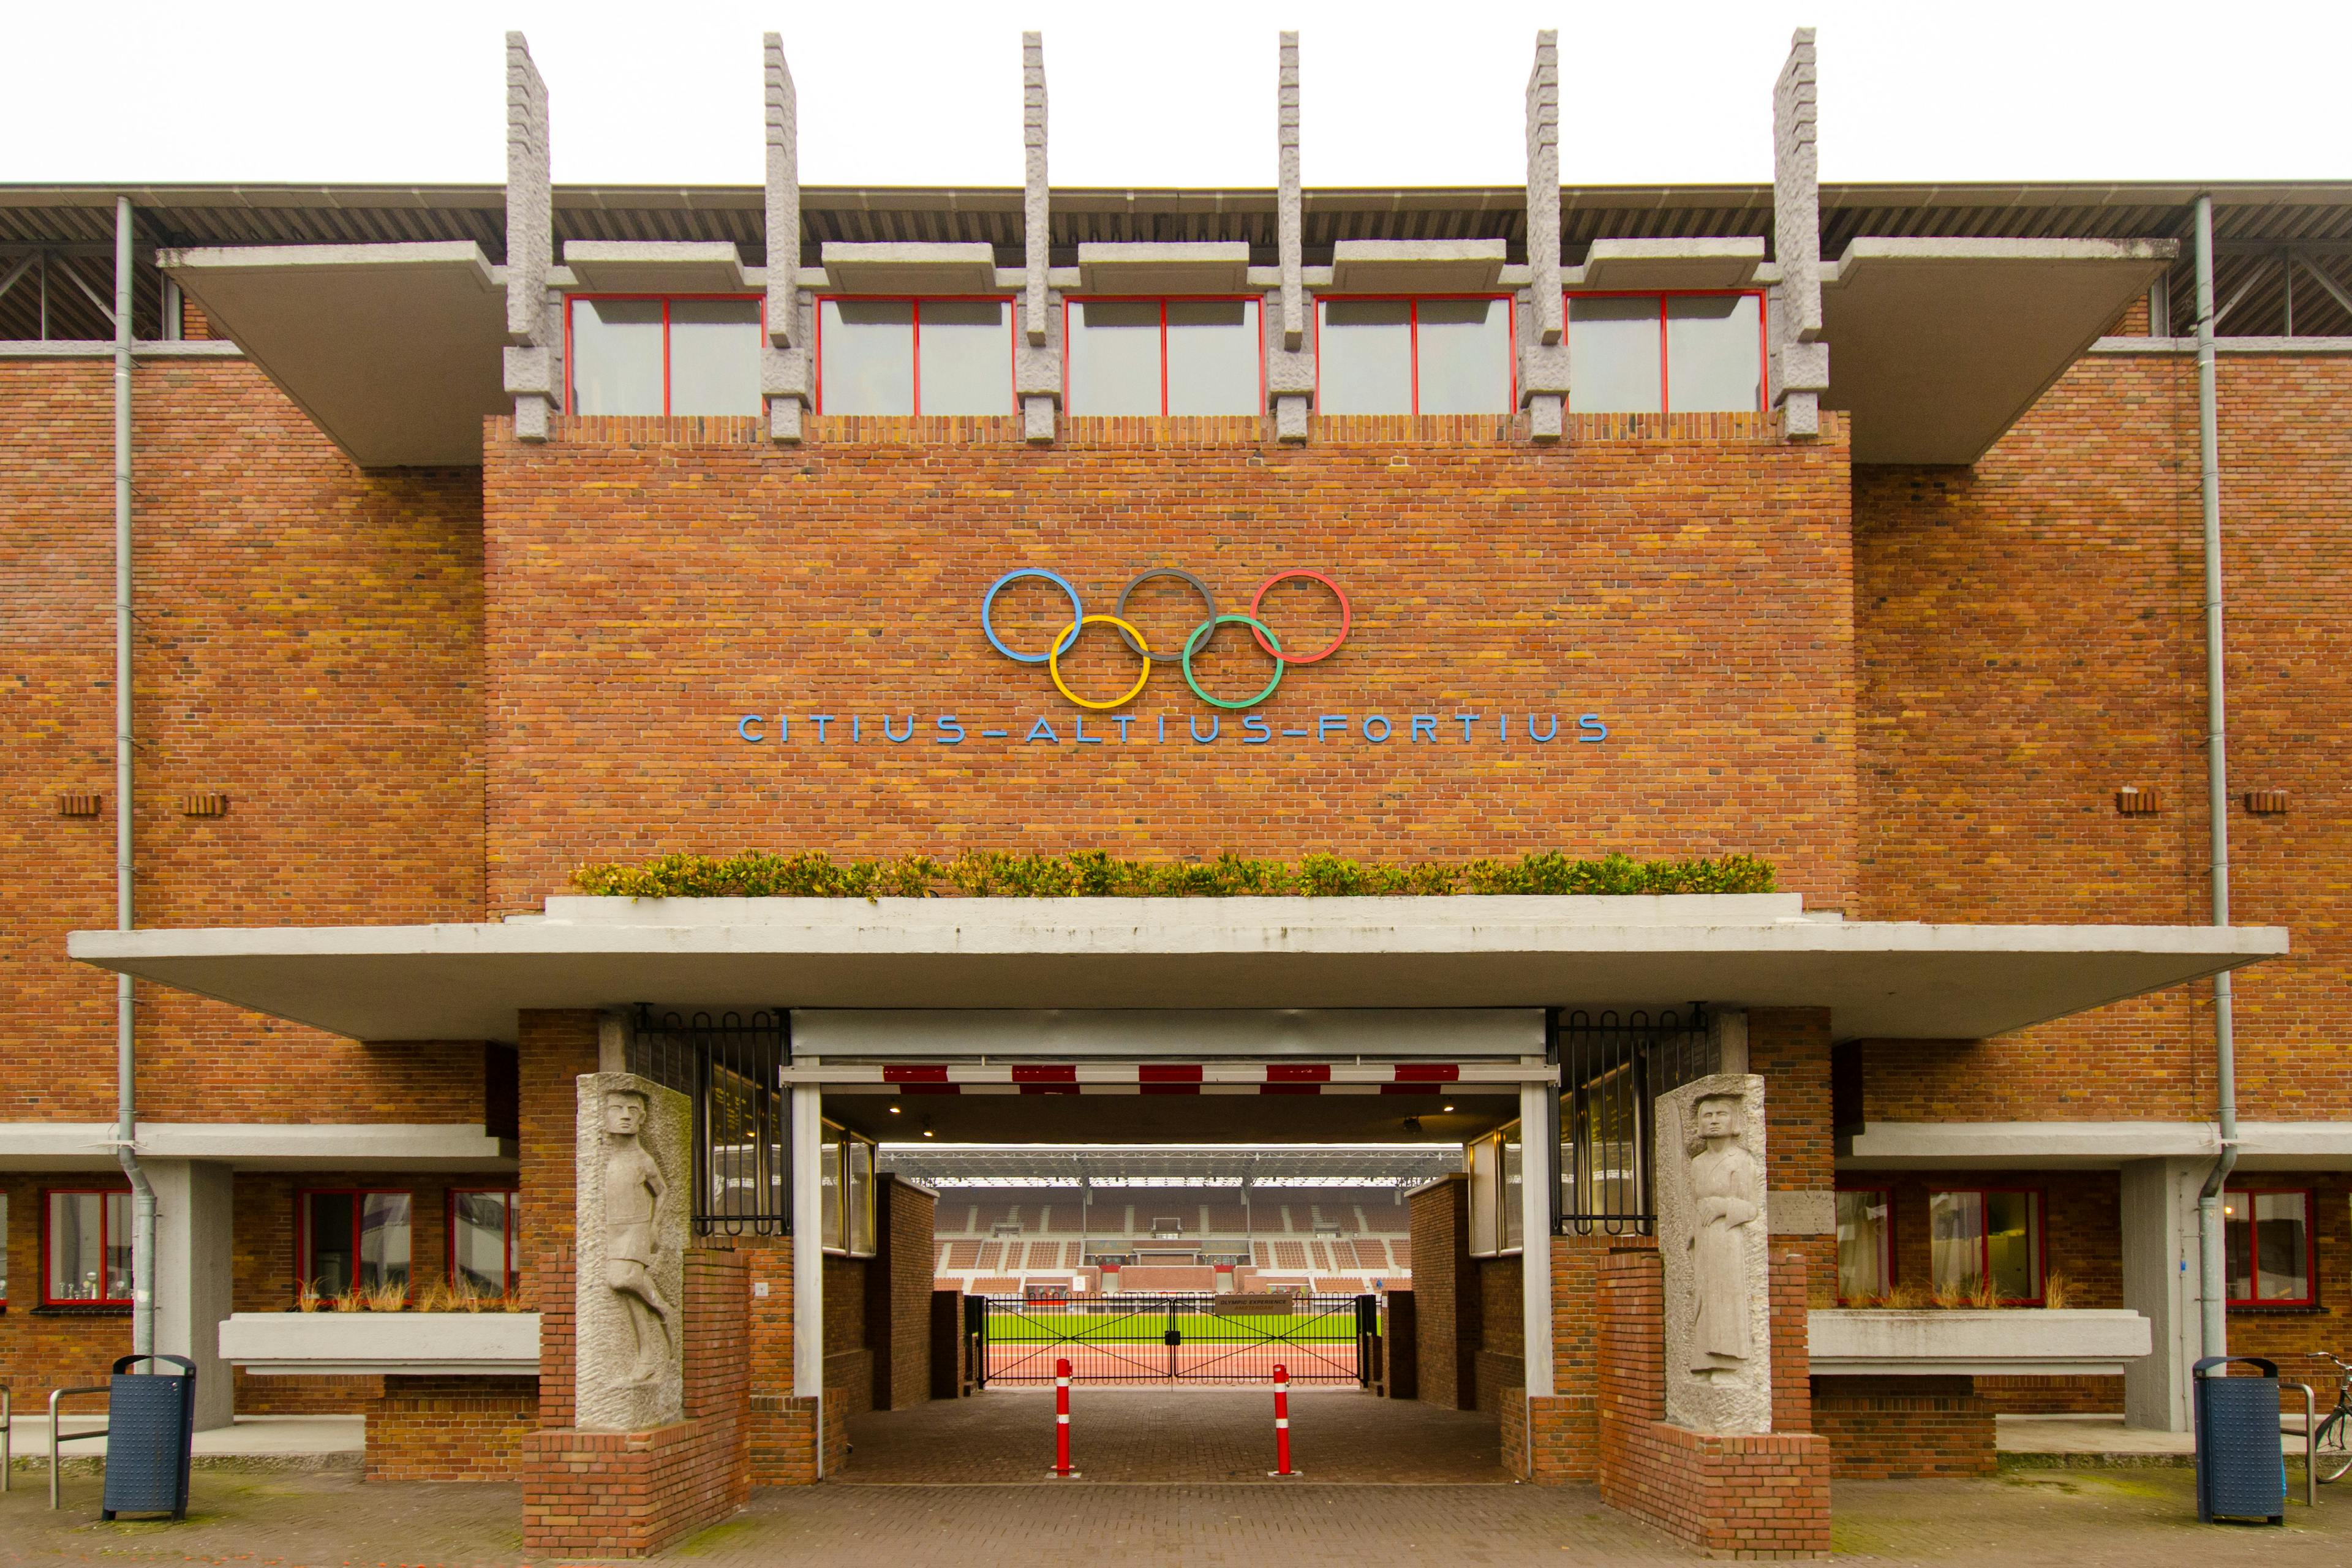 Olympic Stadium Amsterdam